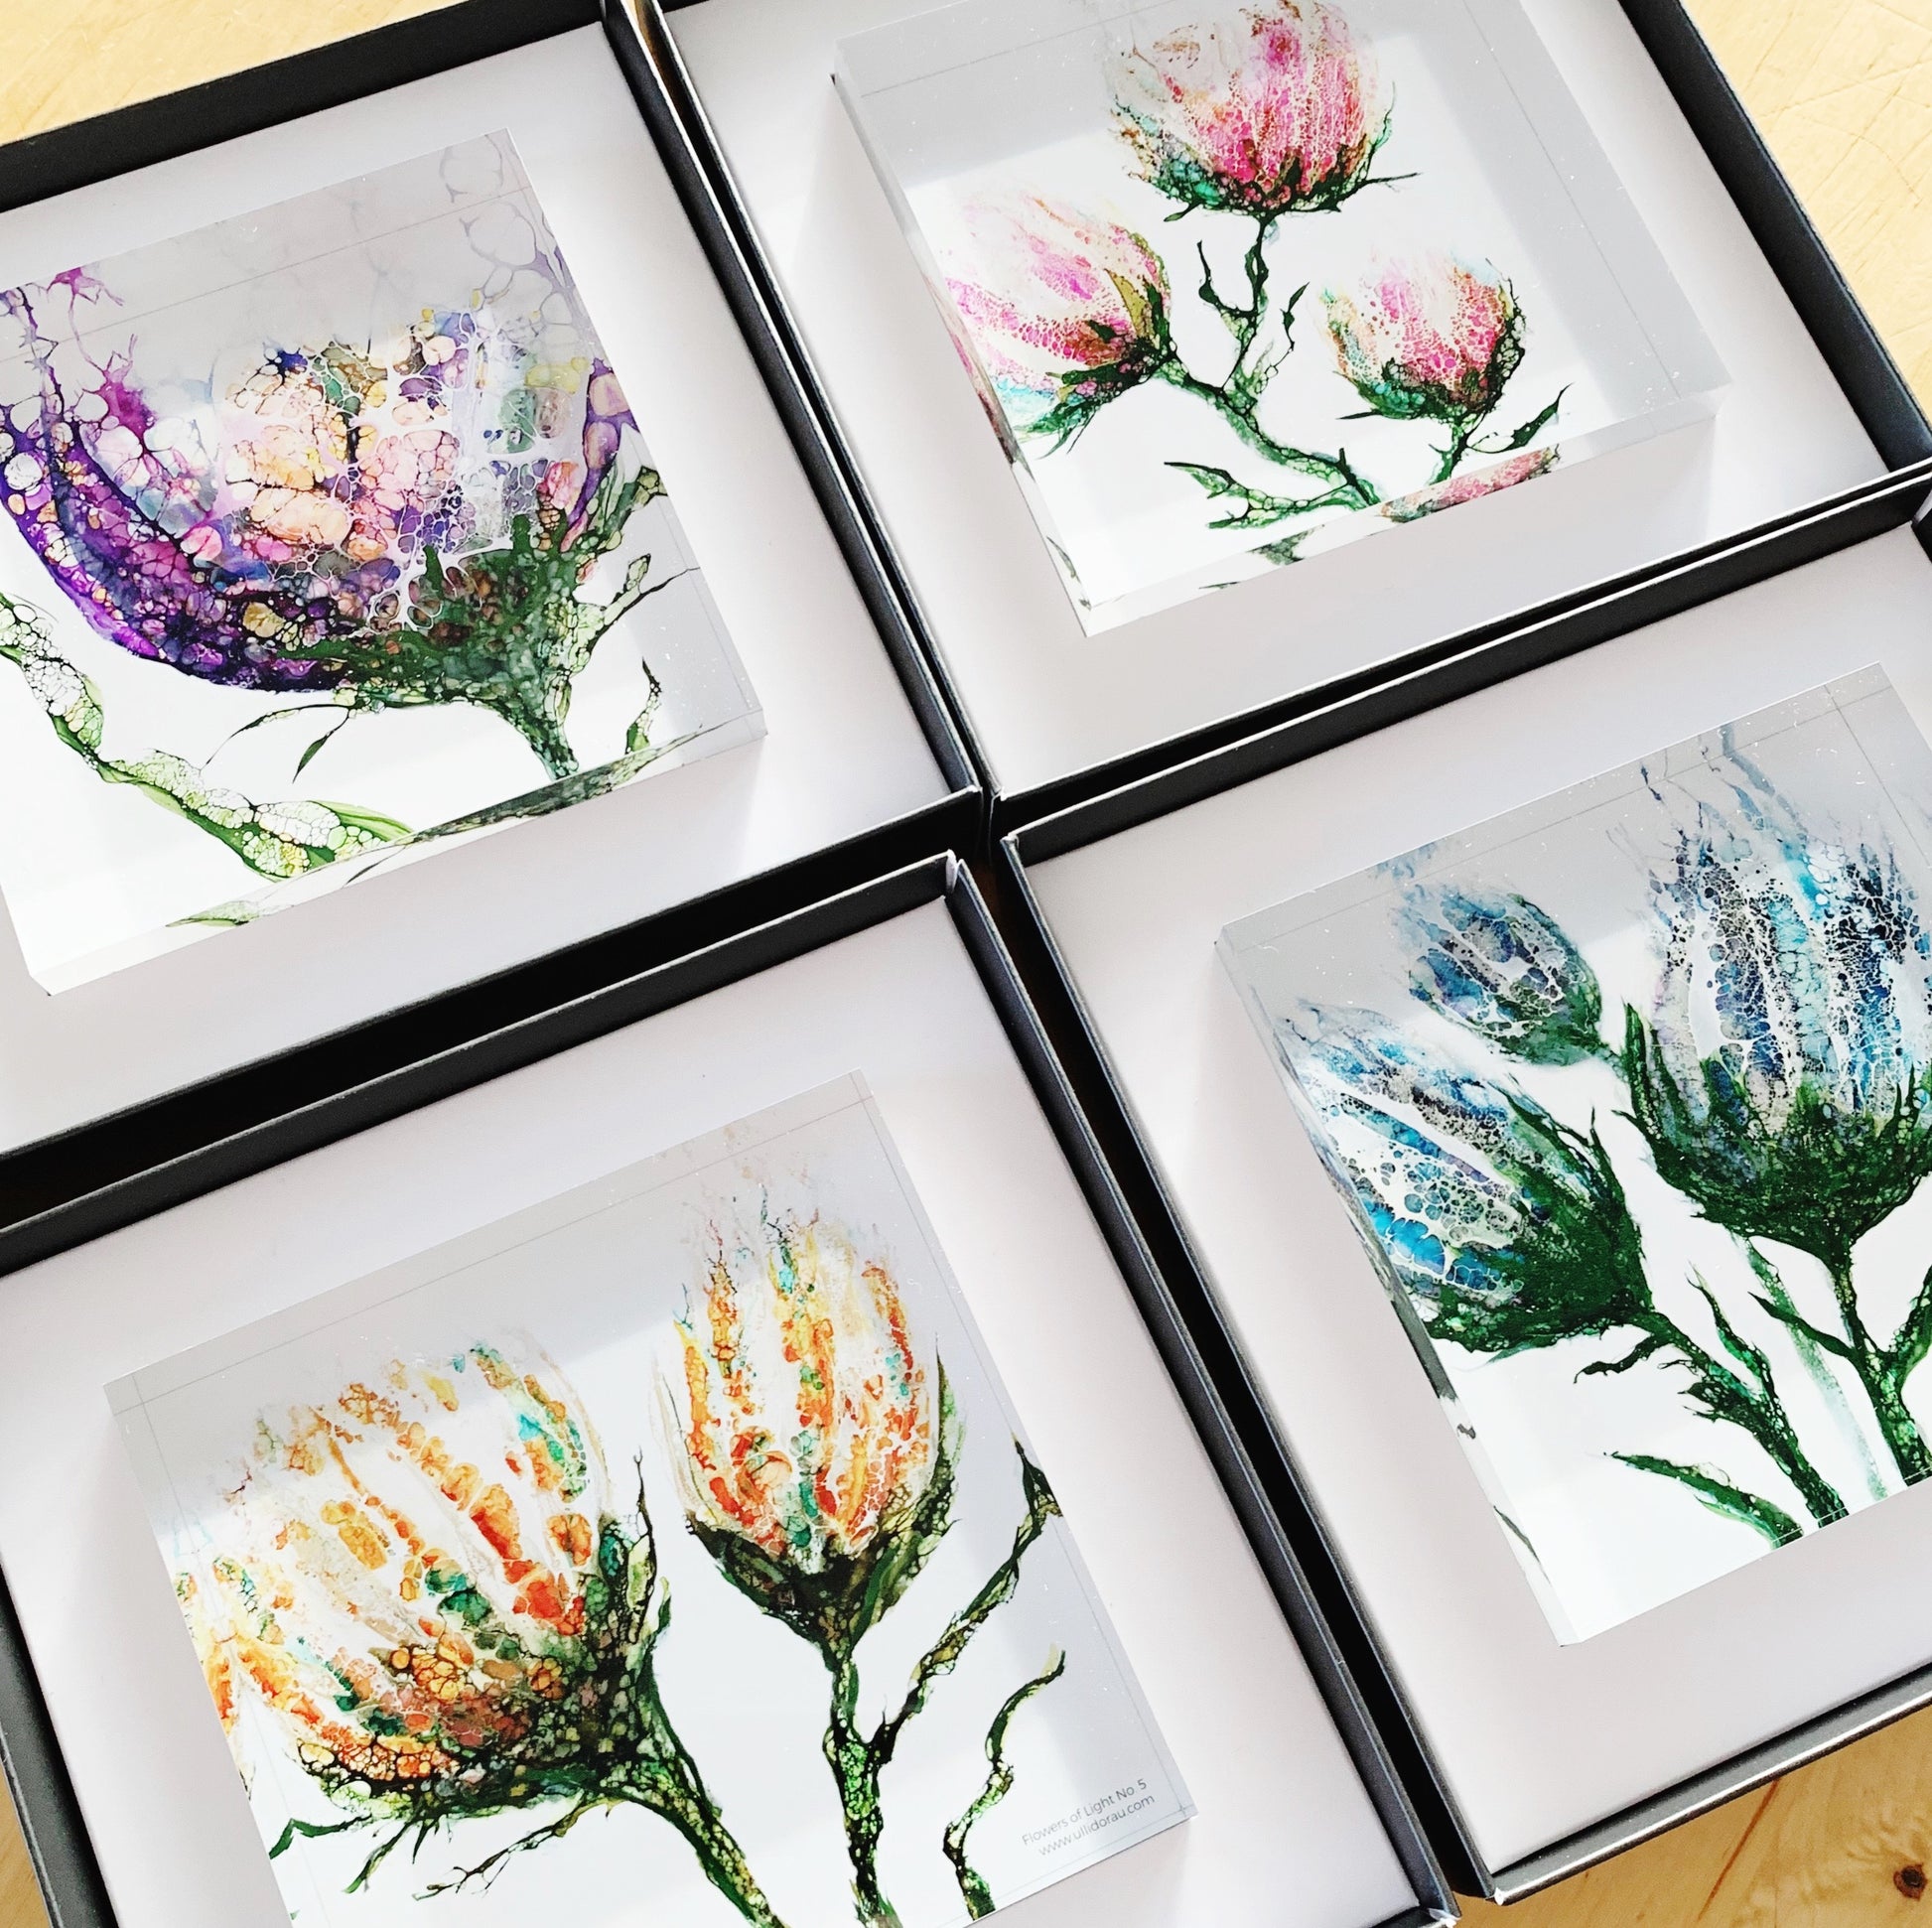 Blumenbilder in verschiedenen Farben als Geschenk in Geschenkboxen